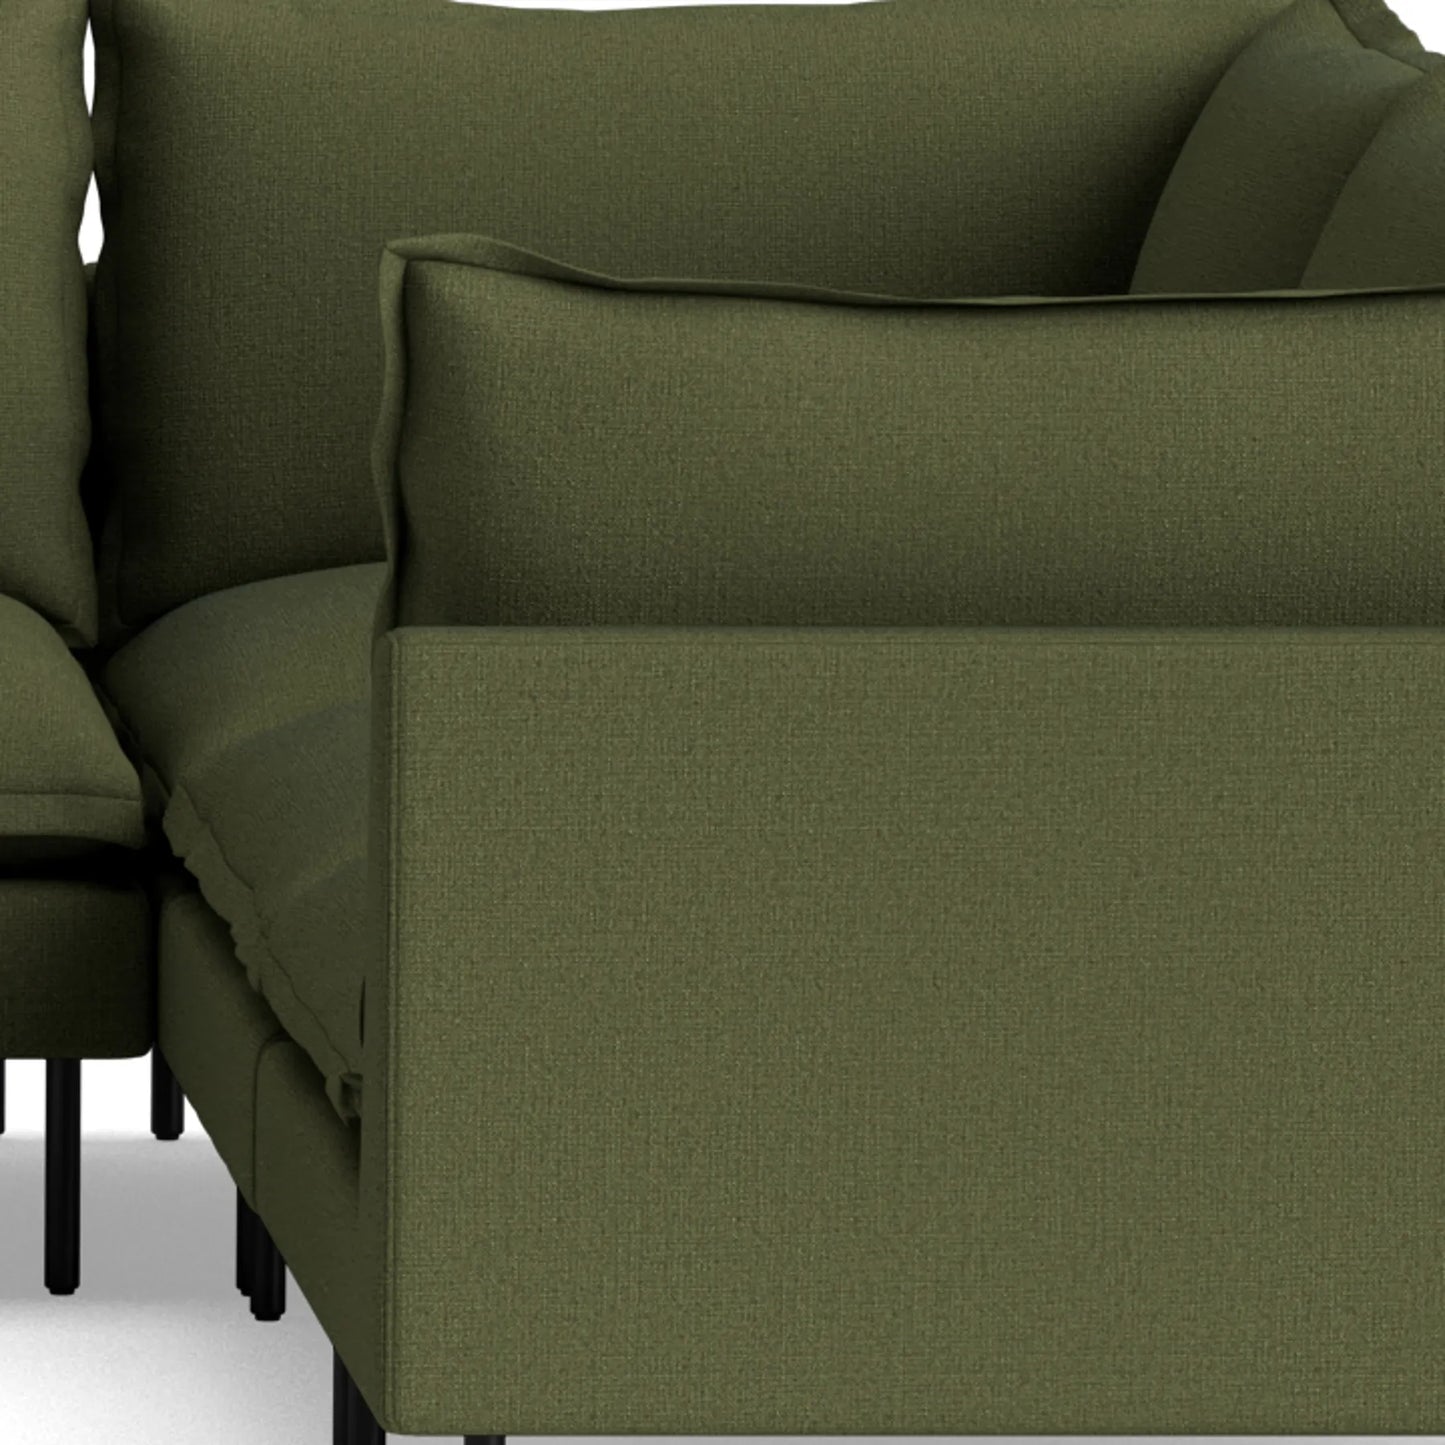 Seam U Shape Modular Sofa - Siena Forest